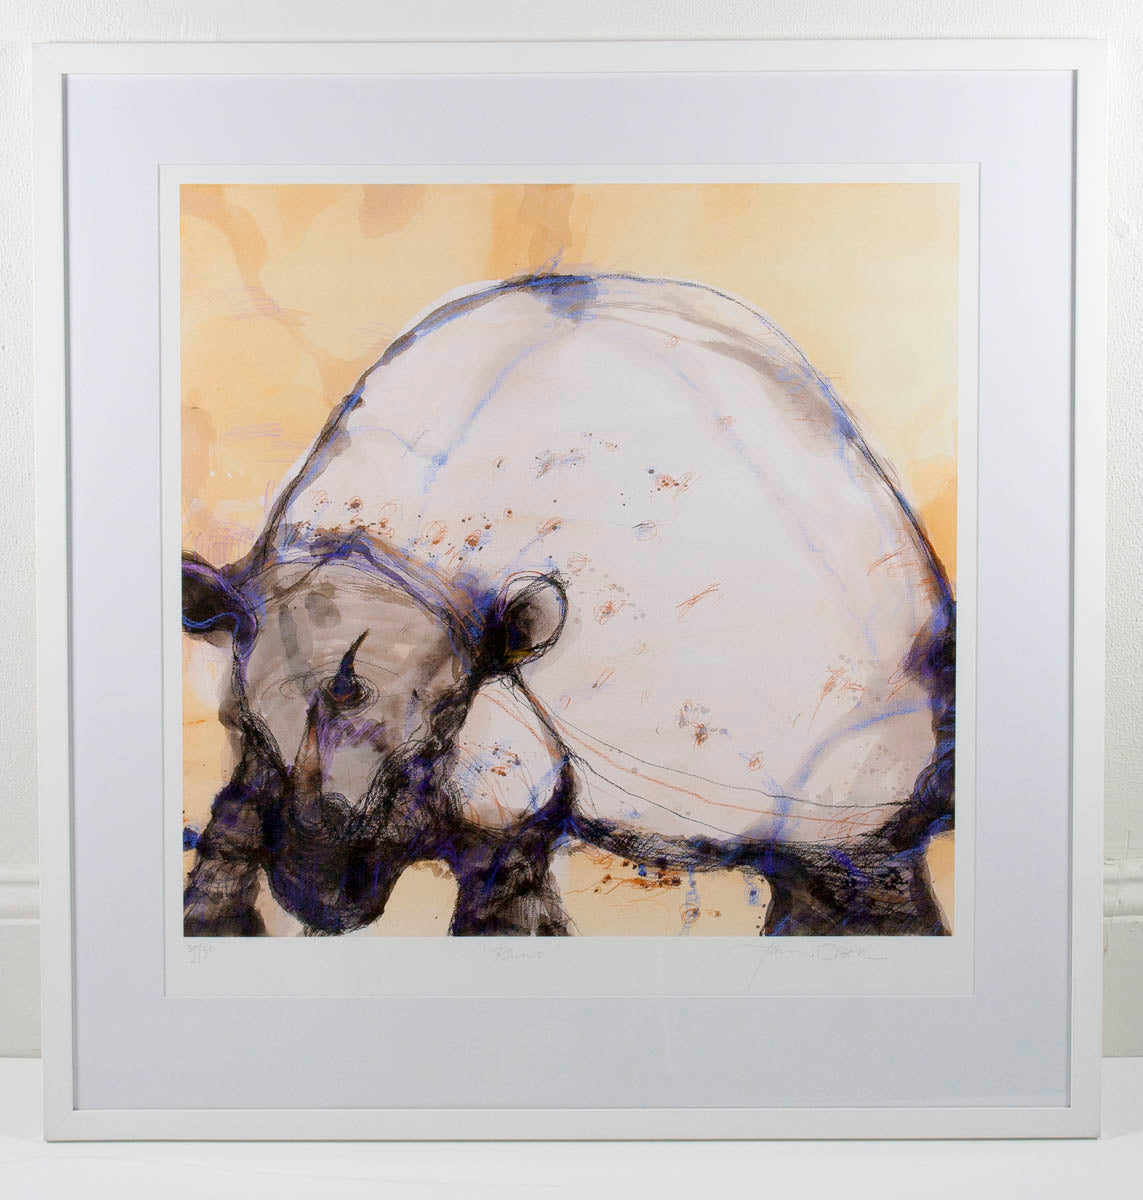 John Olsen 'White Rhino' - pigment print on paper